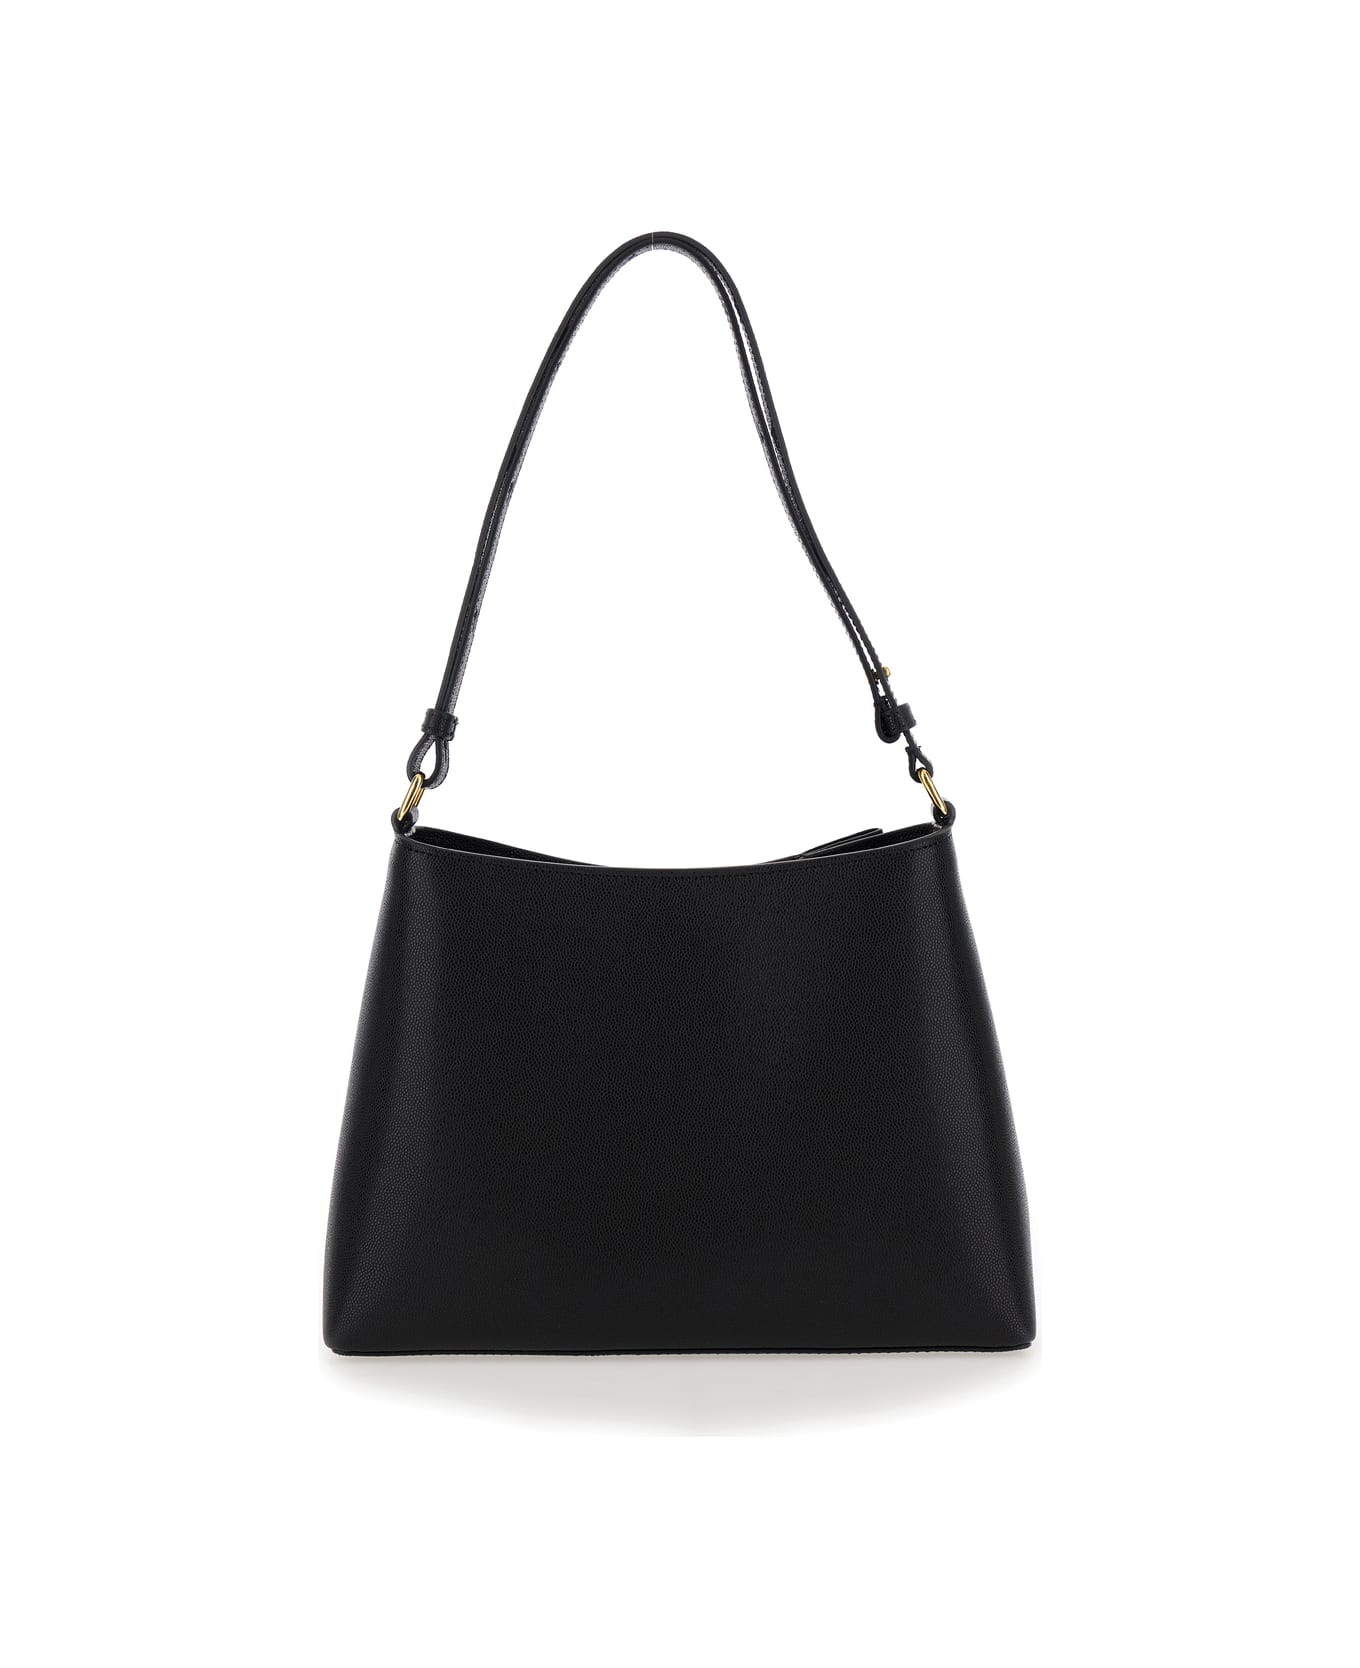 Balmain Black Shoulder Bag With Emblème Motif In Grained Leather Woman - Black トートバッグ